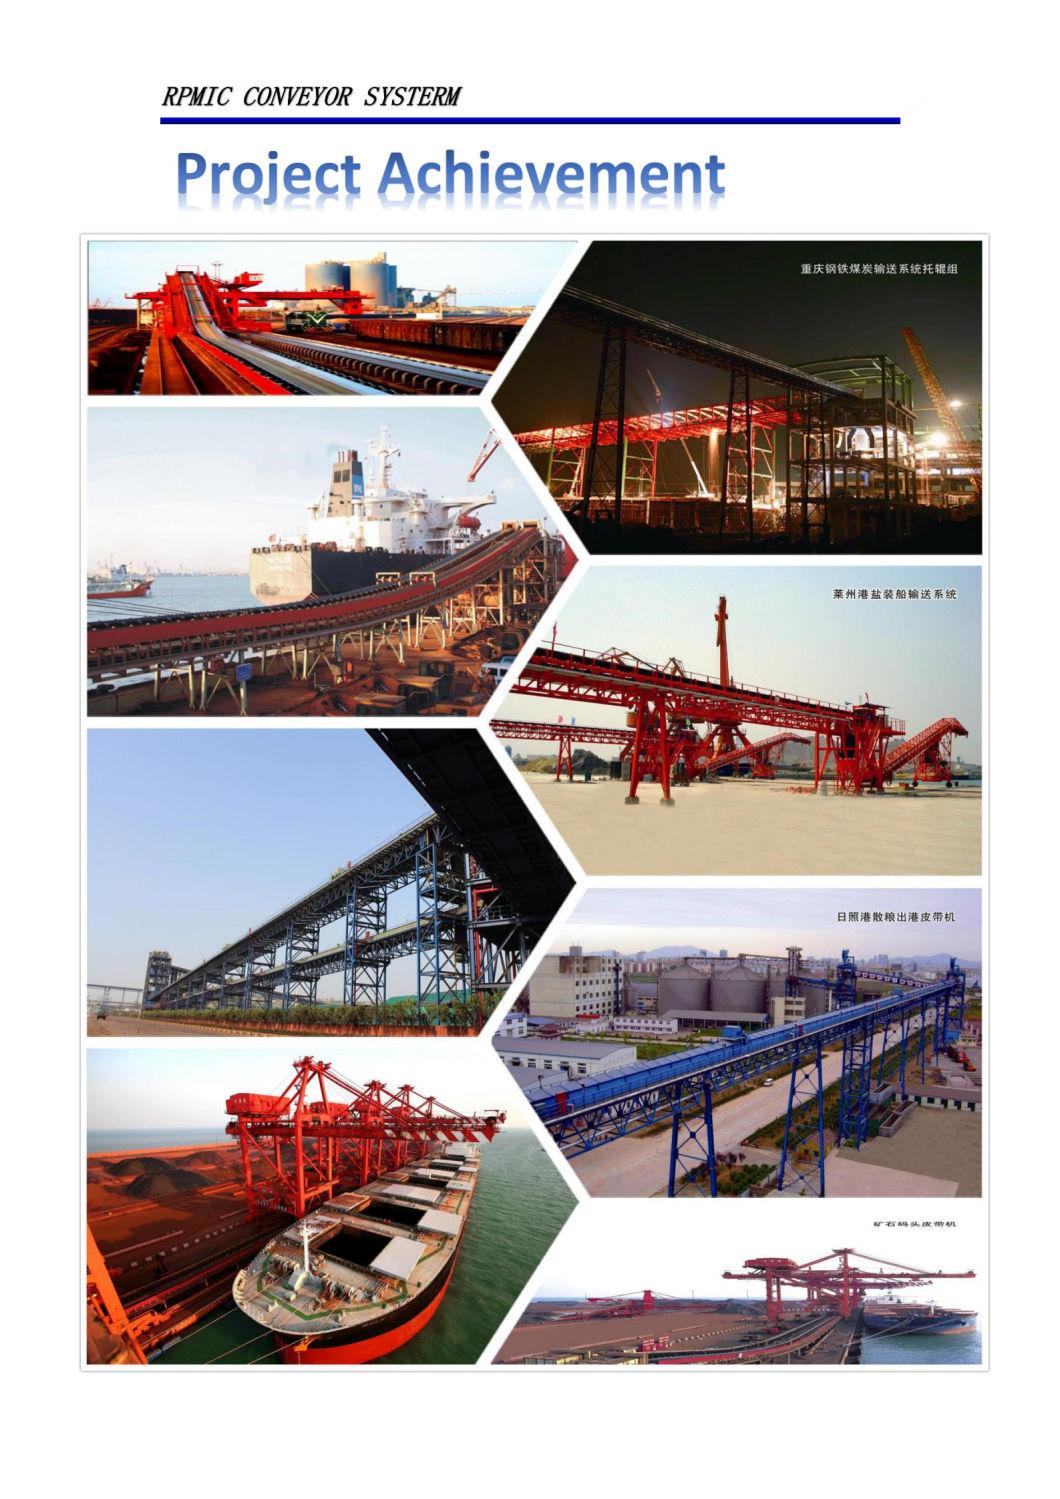 JIS/DIN Standard Roller Frame for Port, Cement, Power Plant Industries